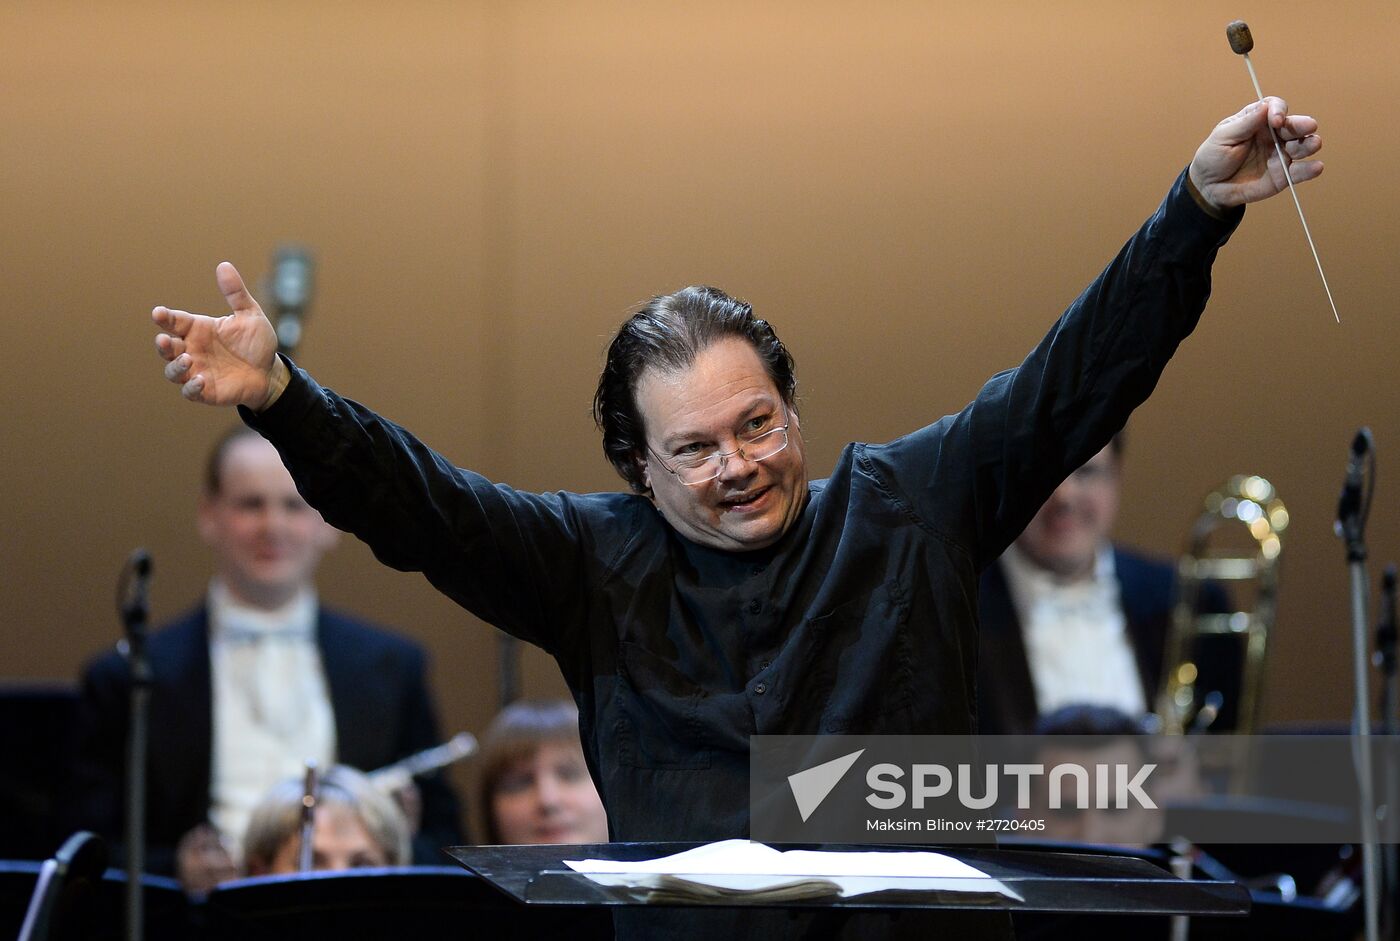 Concert in honor of Leonid Desyatnikov's anniversary